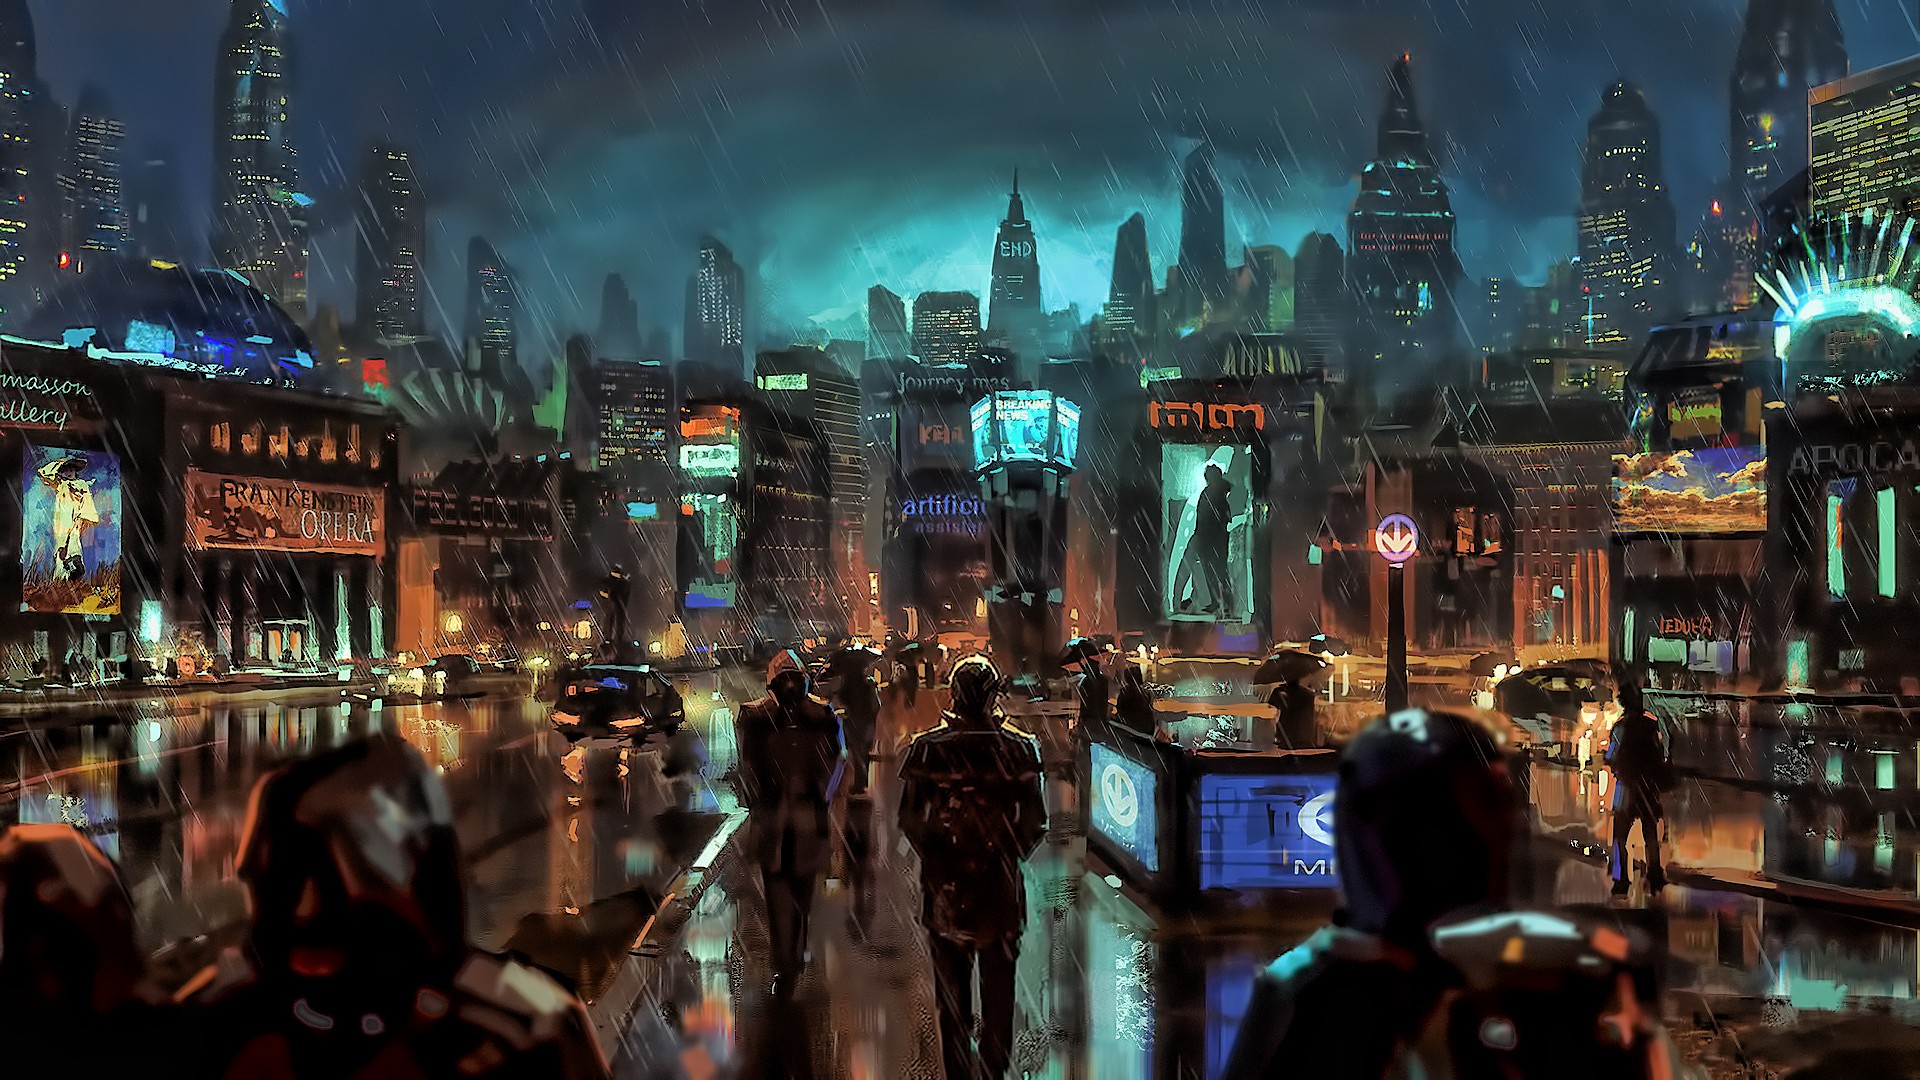 General 1920x1080 science fiction city futuristic city futuristic artwork night sky rain wet street wet cityscape city lights cyan colorful street people